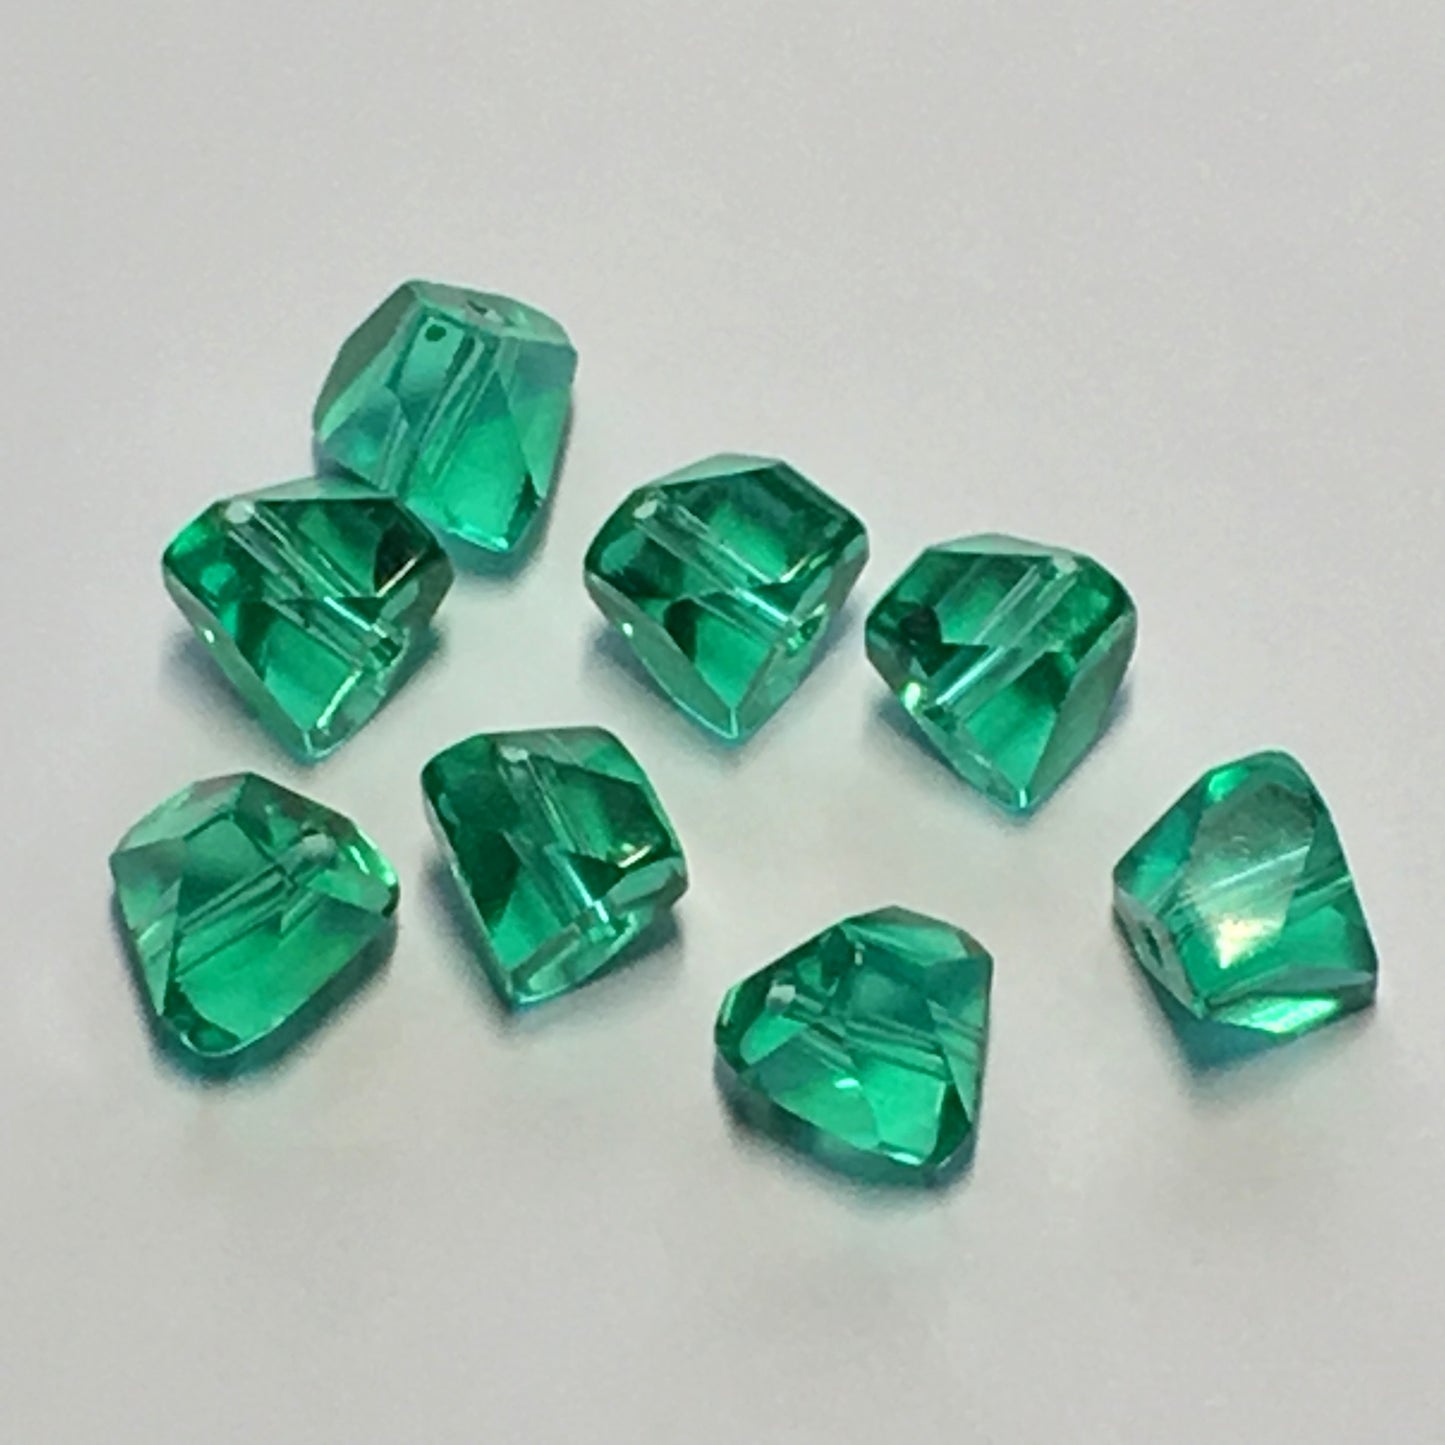 Transparent Green Glass Opposing Cornerless Cube Beads, 6 mm, 8 Beads